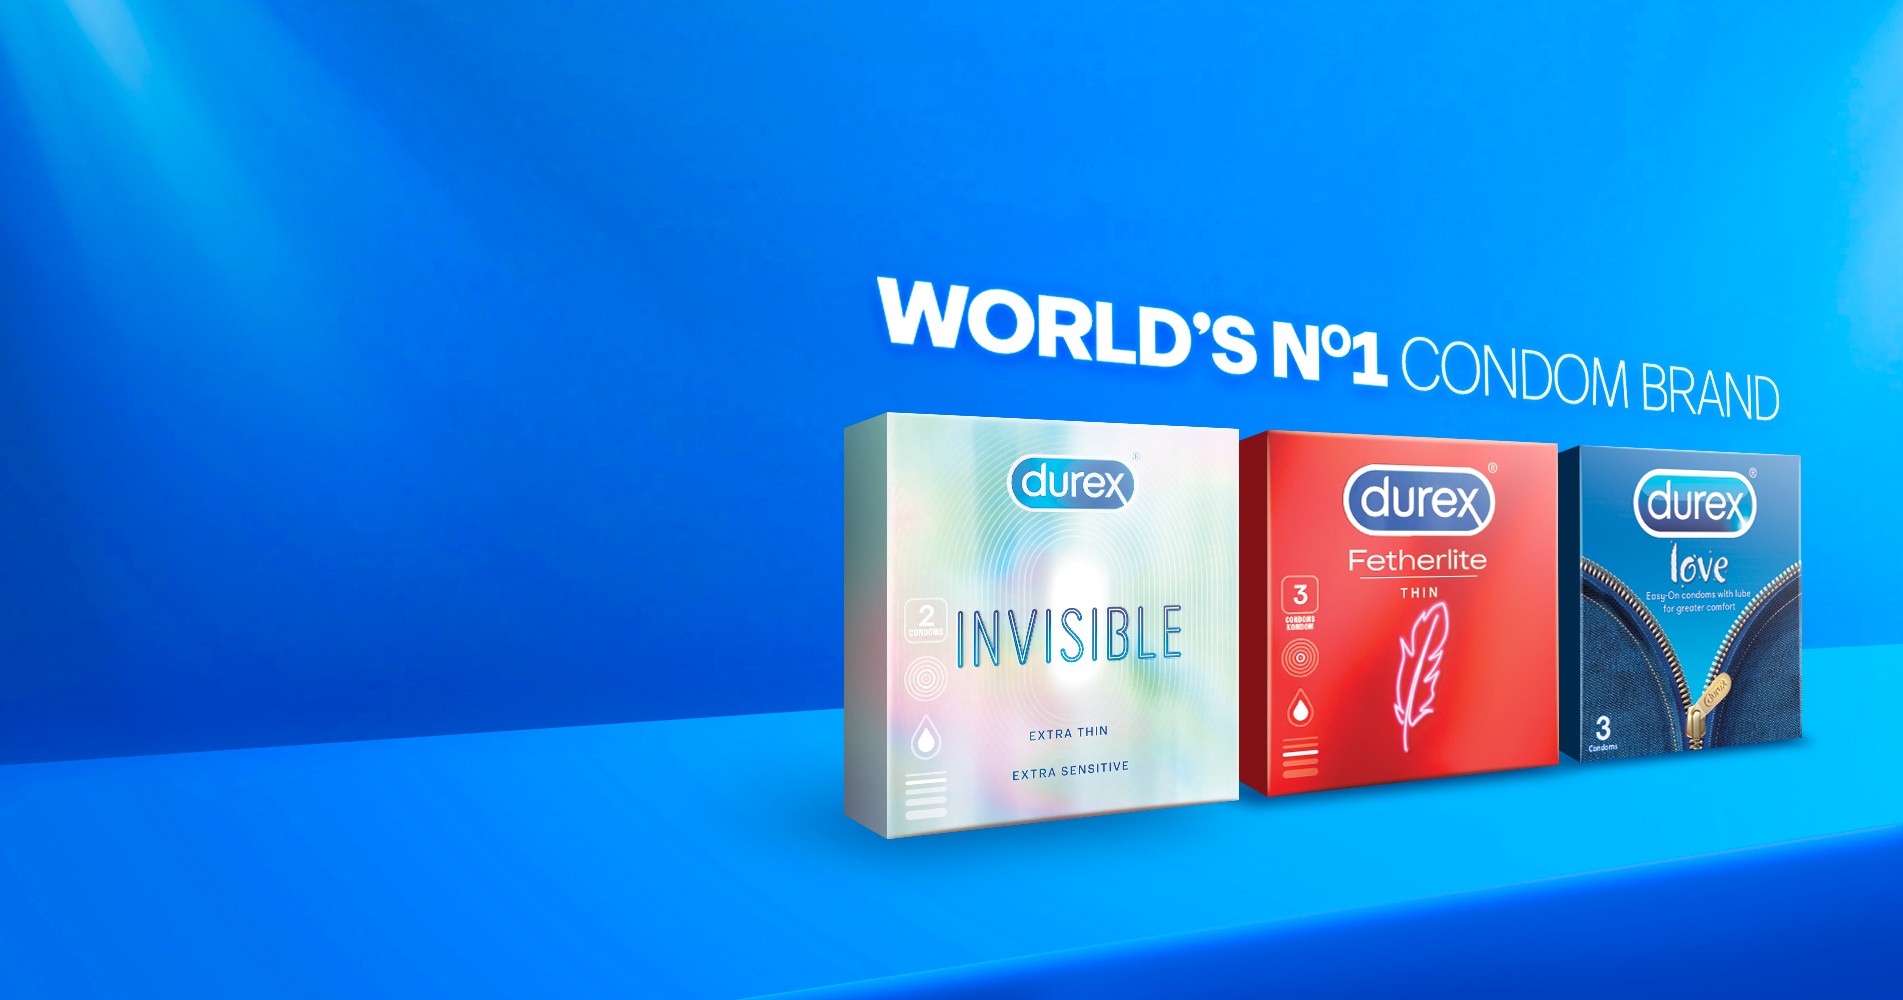 World #1 condom